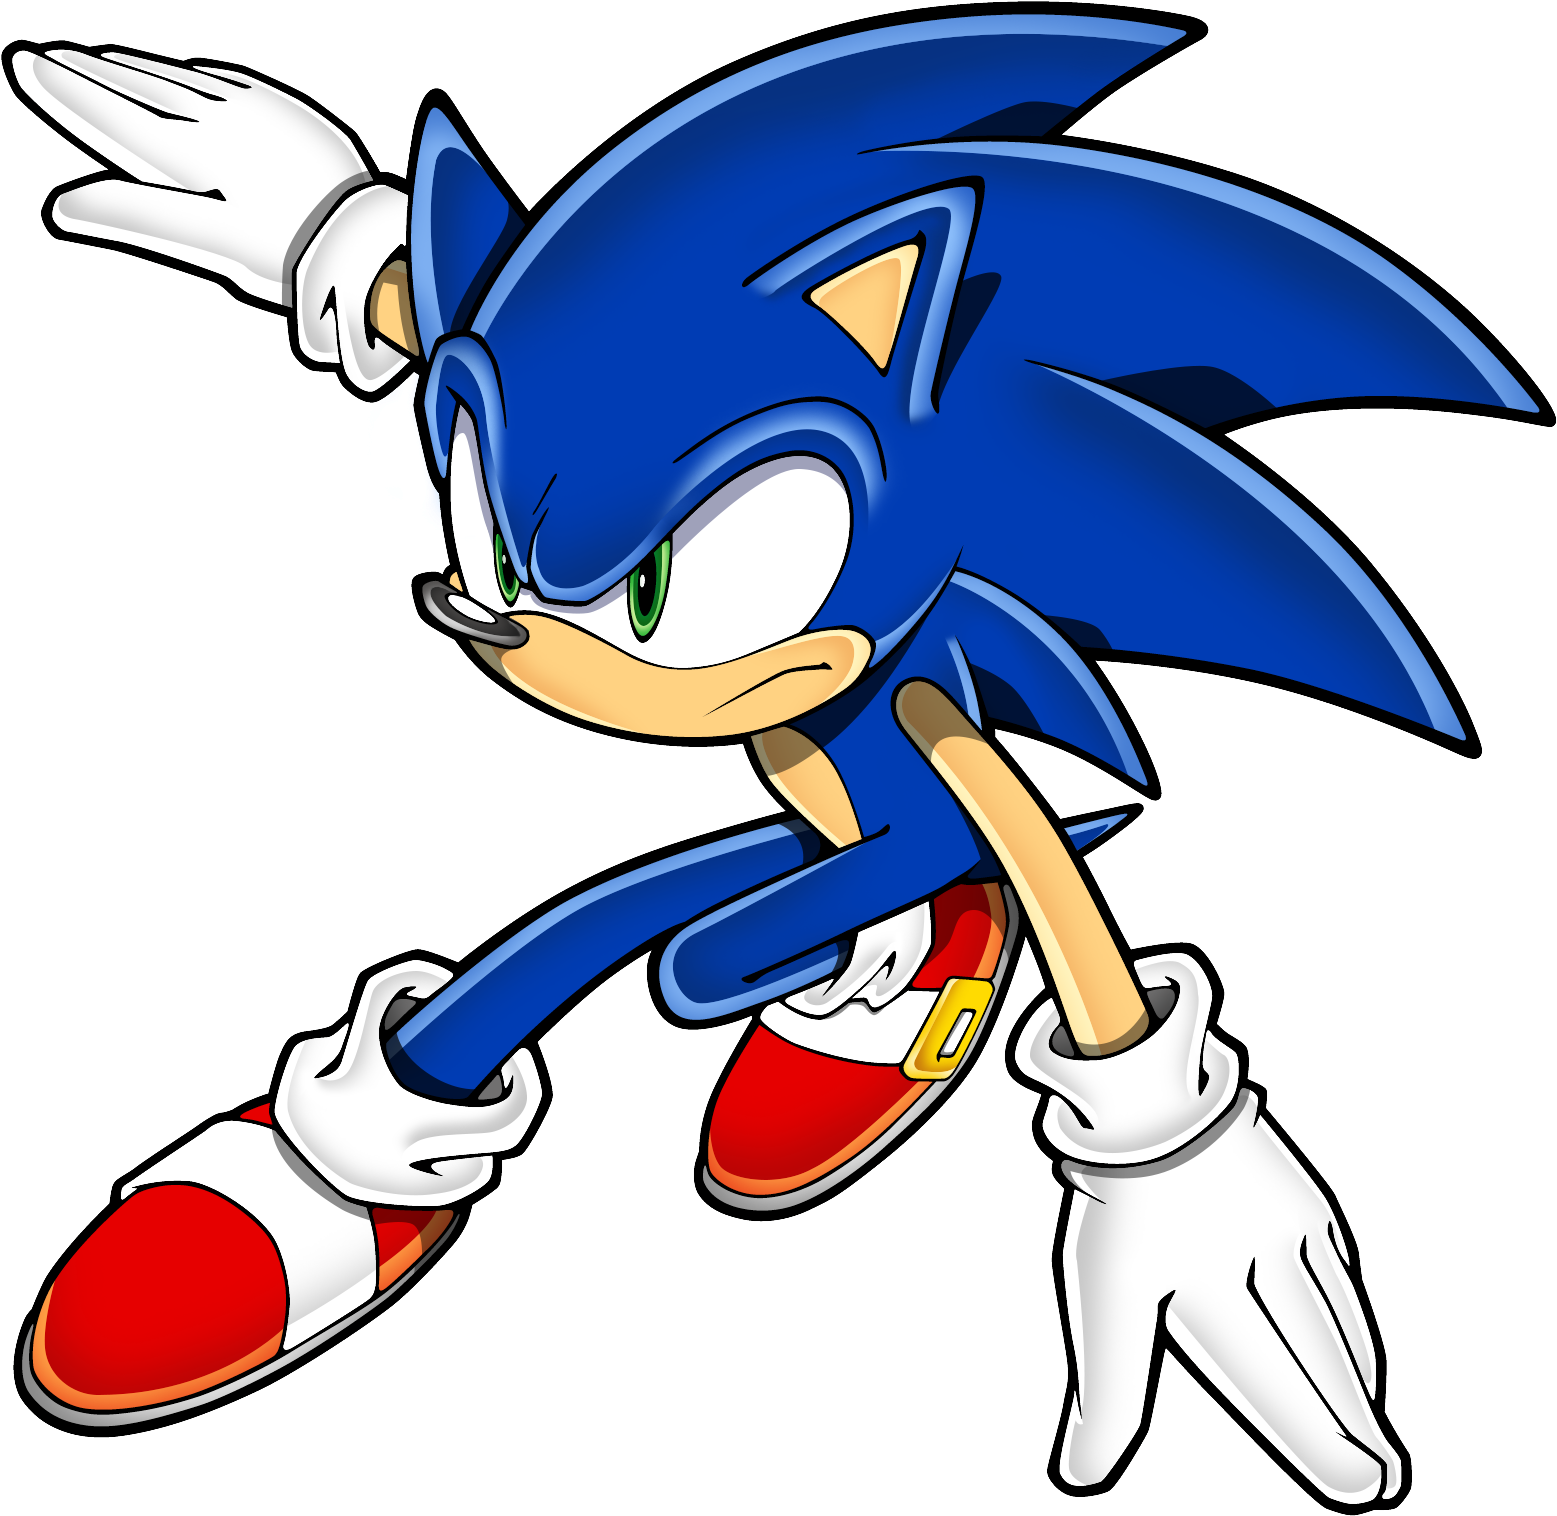 Free Sonic The Hedgehog 1 Artwork - Sonic Advance Artwork (1644x1635)